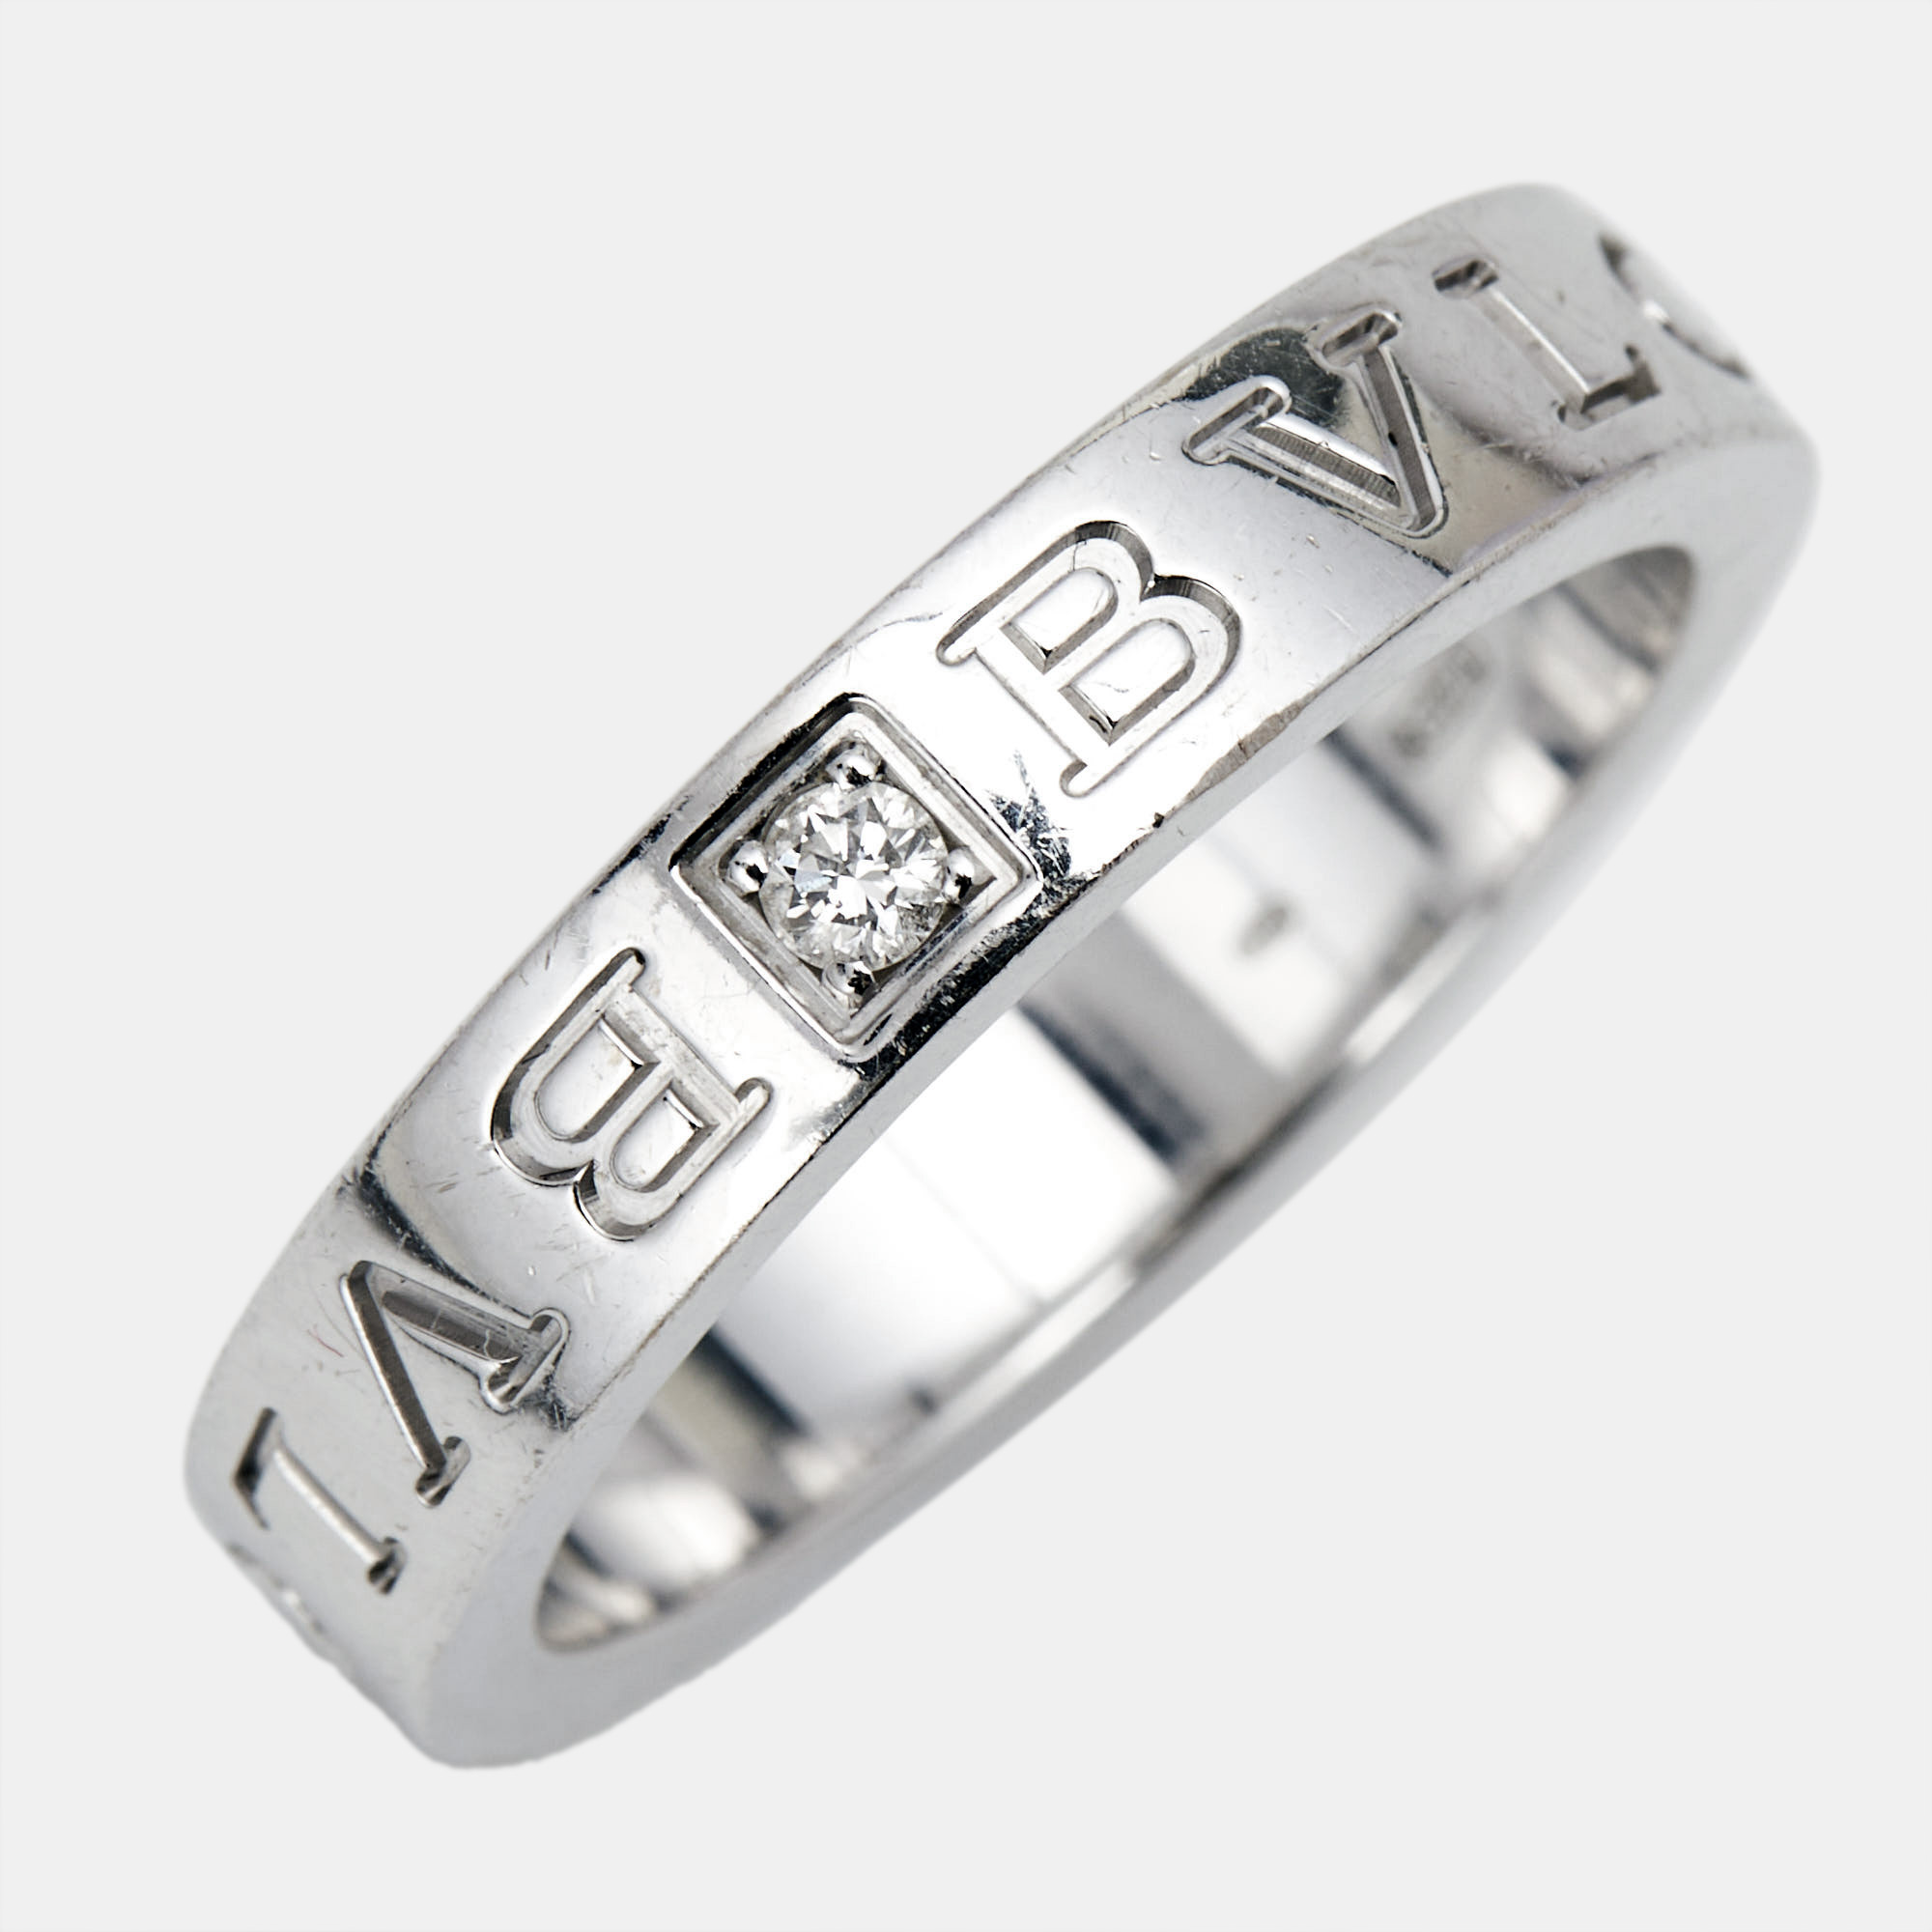 Bvlgari Bvlgari Diamond 18k White Gold Band Ring Size 56